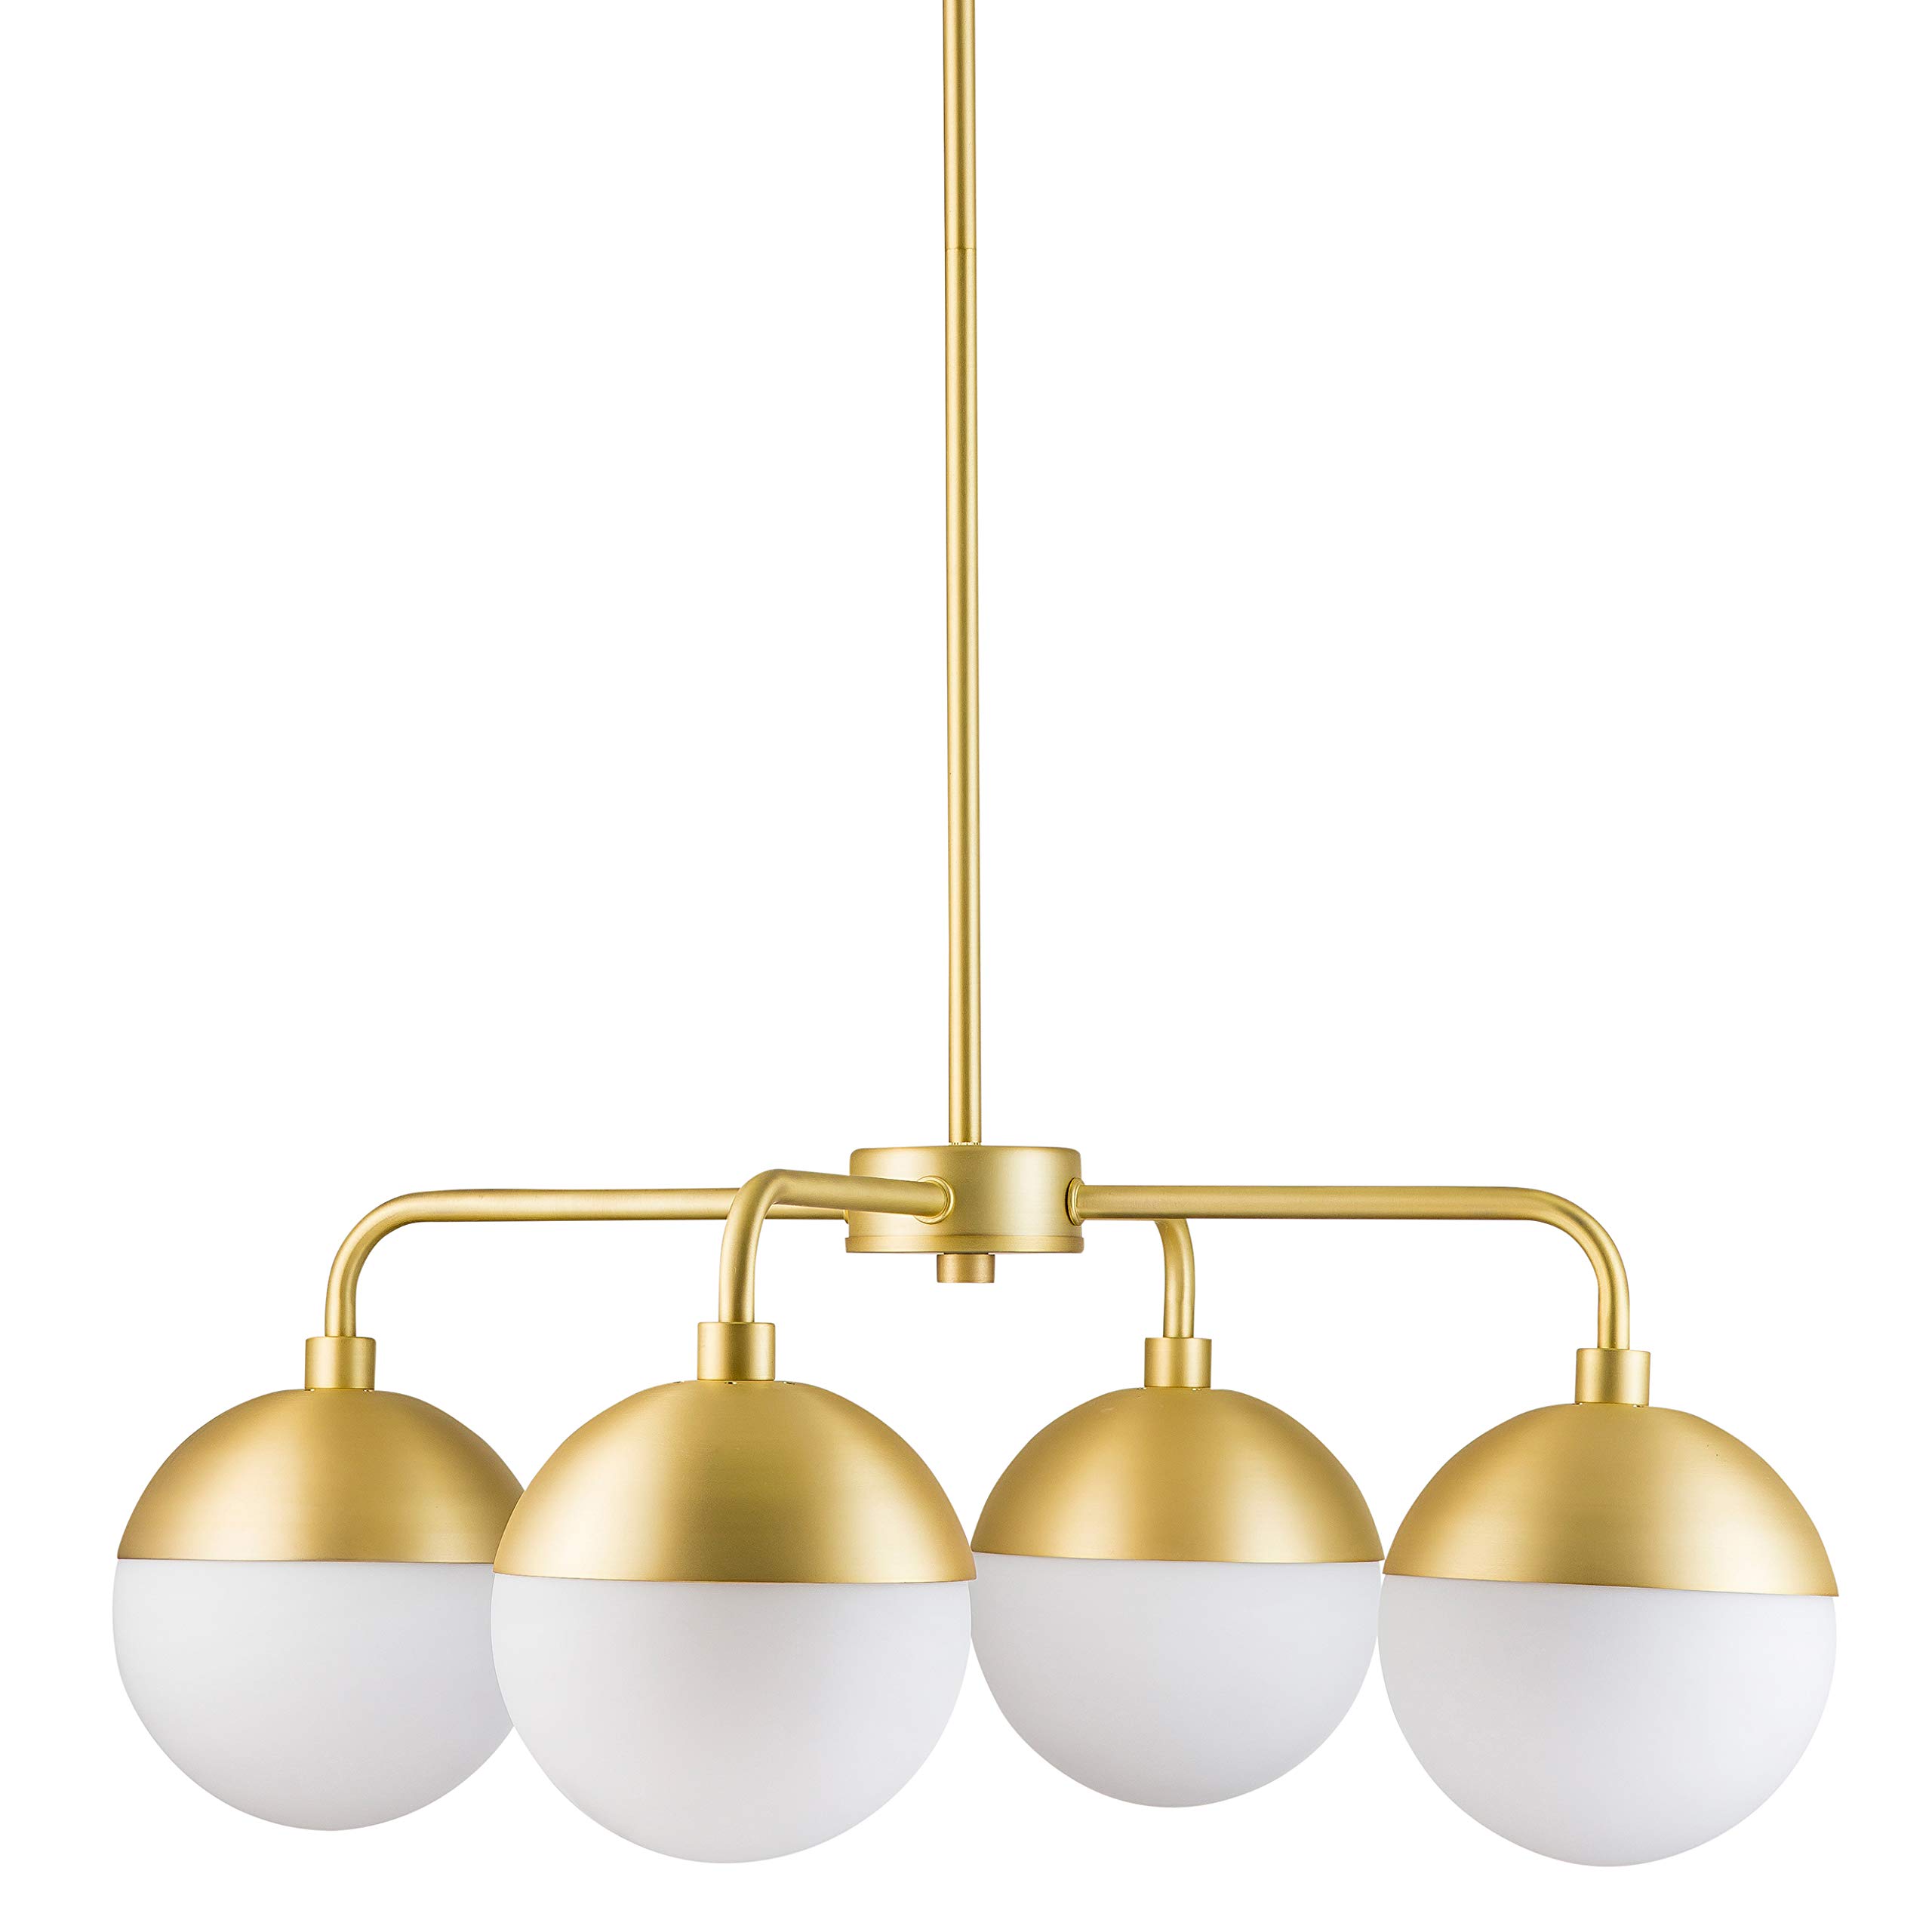 Linea di Liara Novara 4-Light gold chandeliers for Dining Room Light Fixture Over Table glass globe Kitchen Pendant Lighting Han